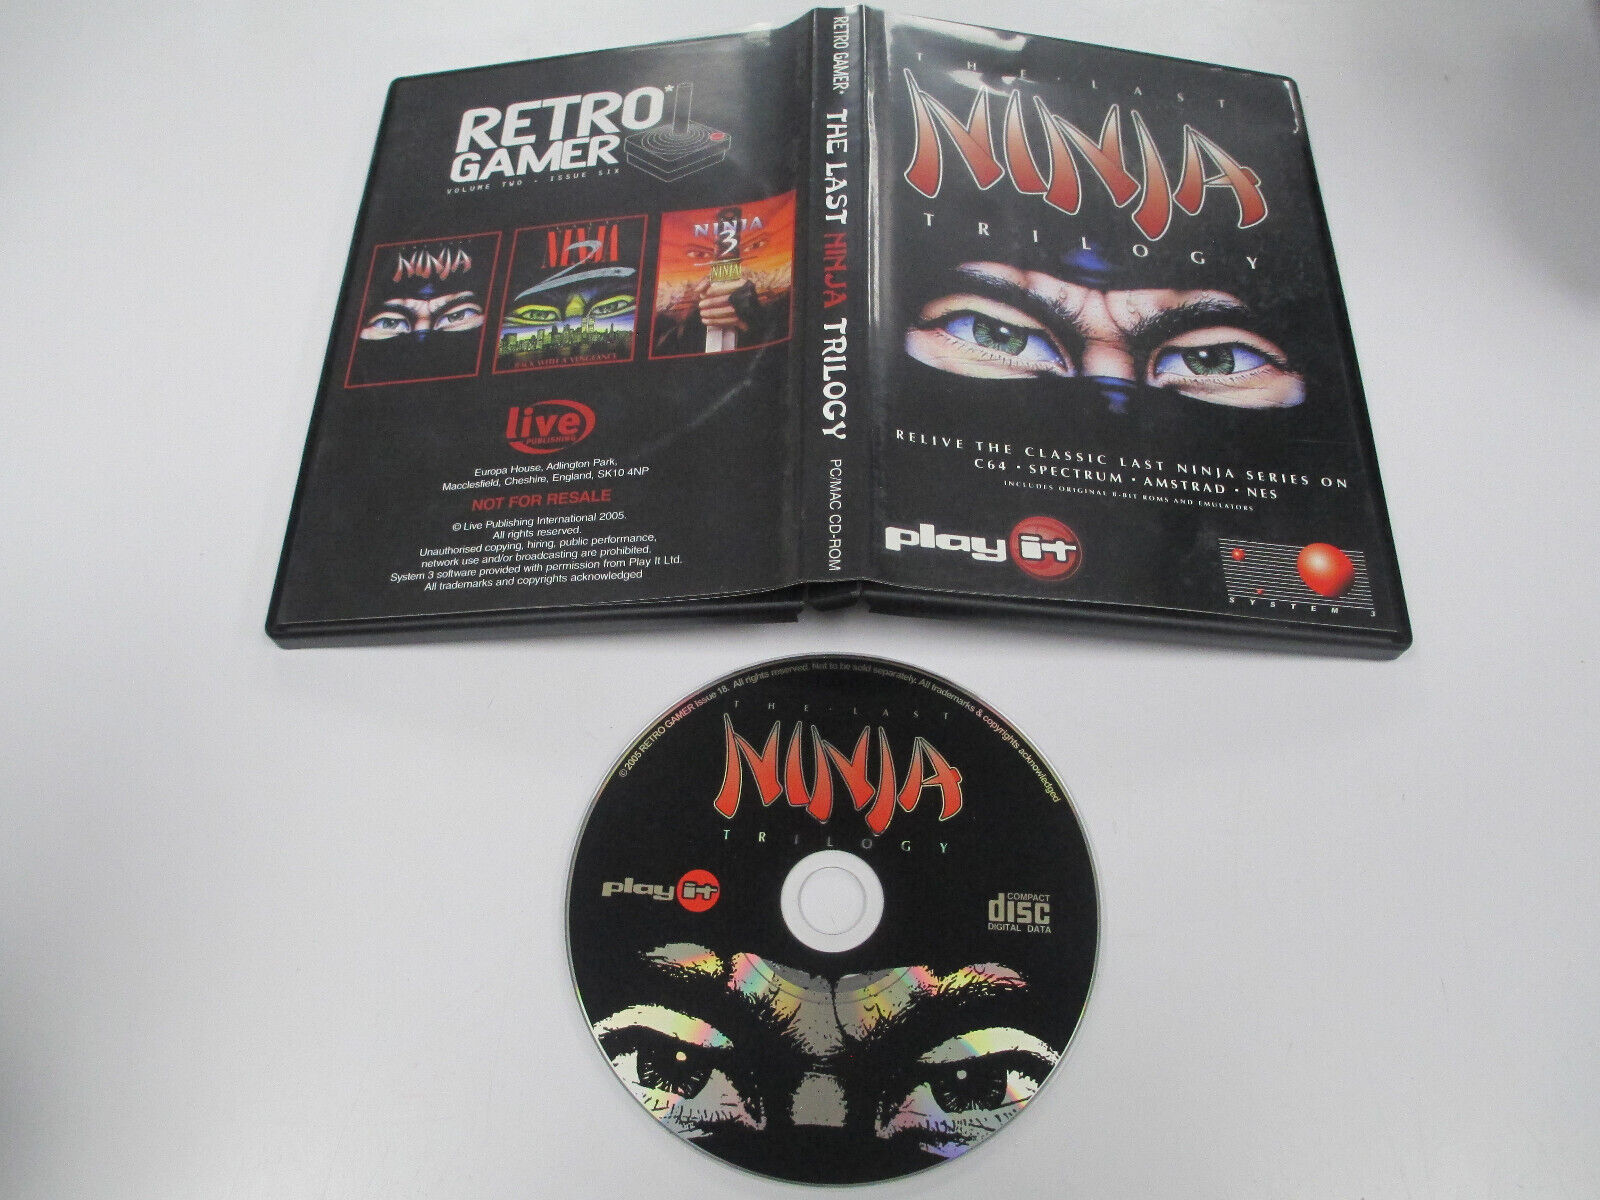 Retro Gamer Volume 2 Issue 6 Cover Disc: The Last Ninja Trilogy (PC, 2005)